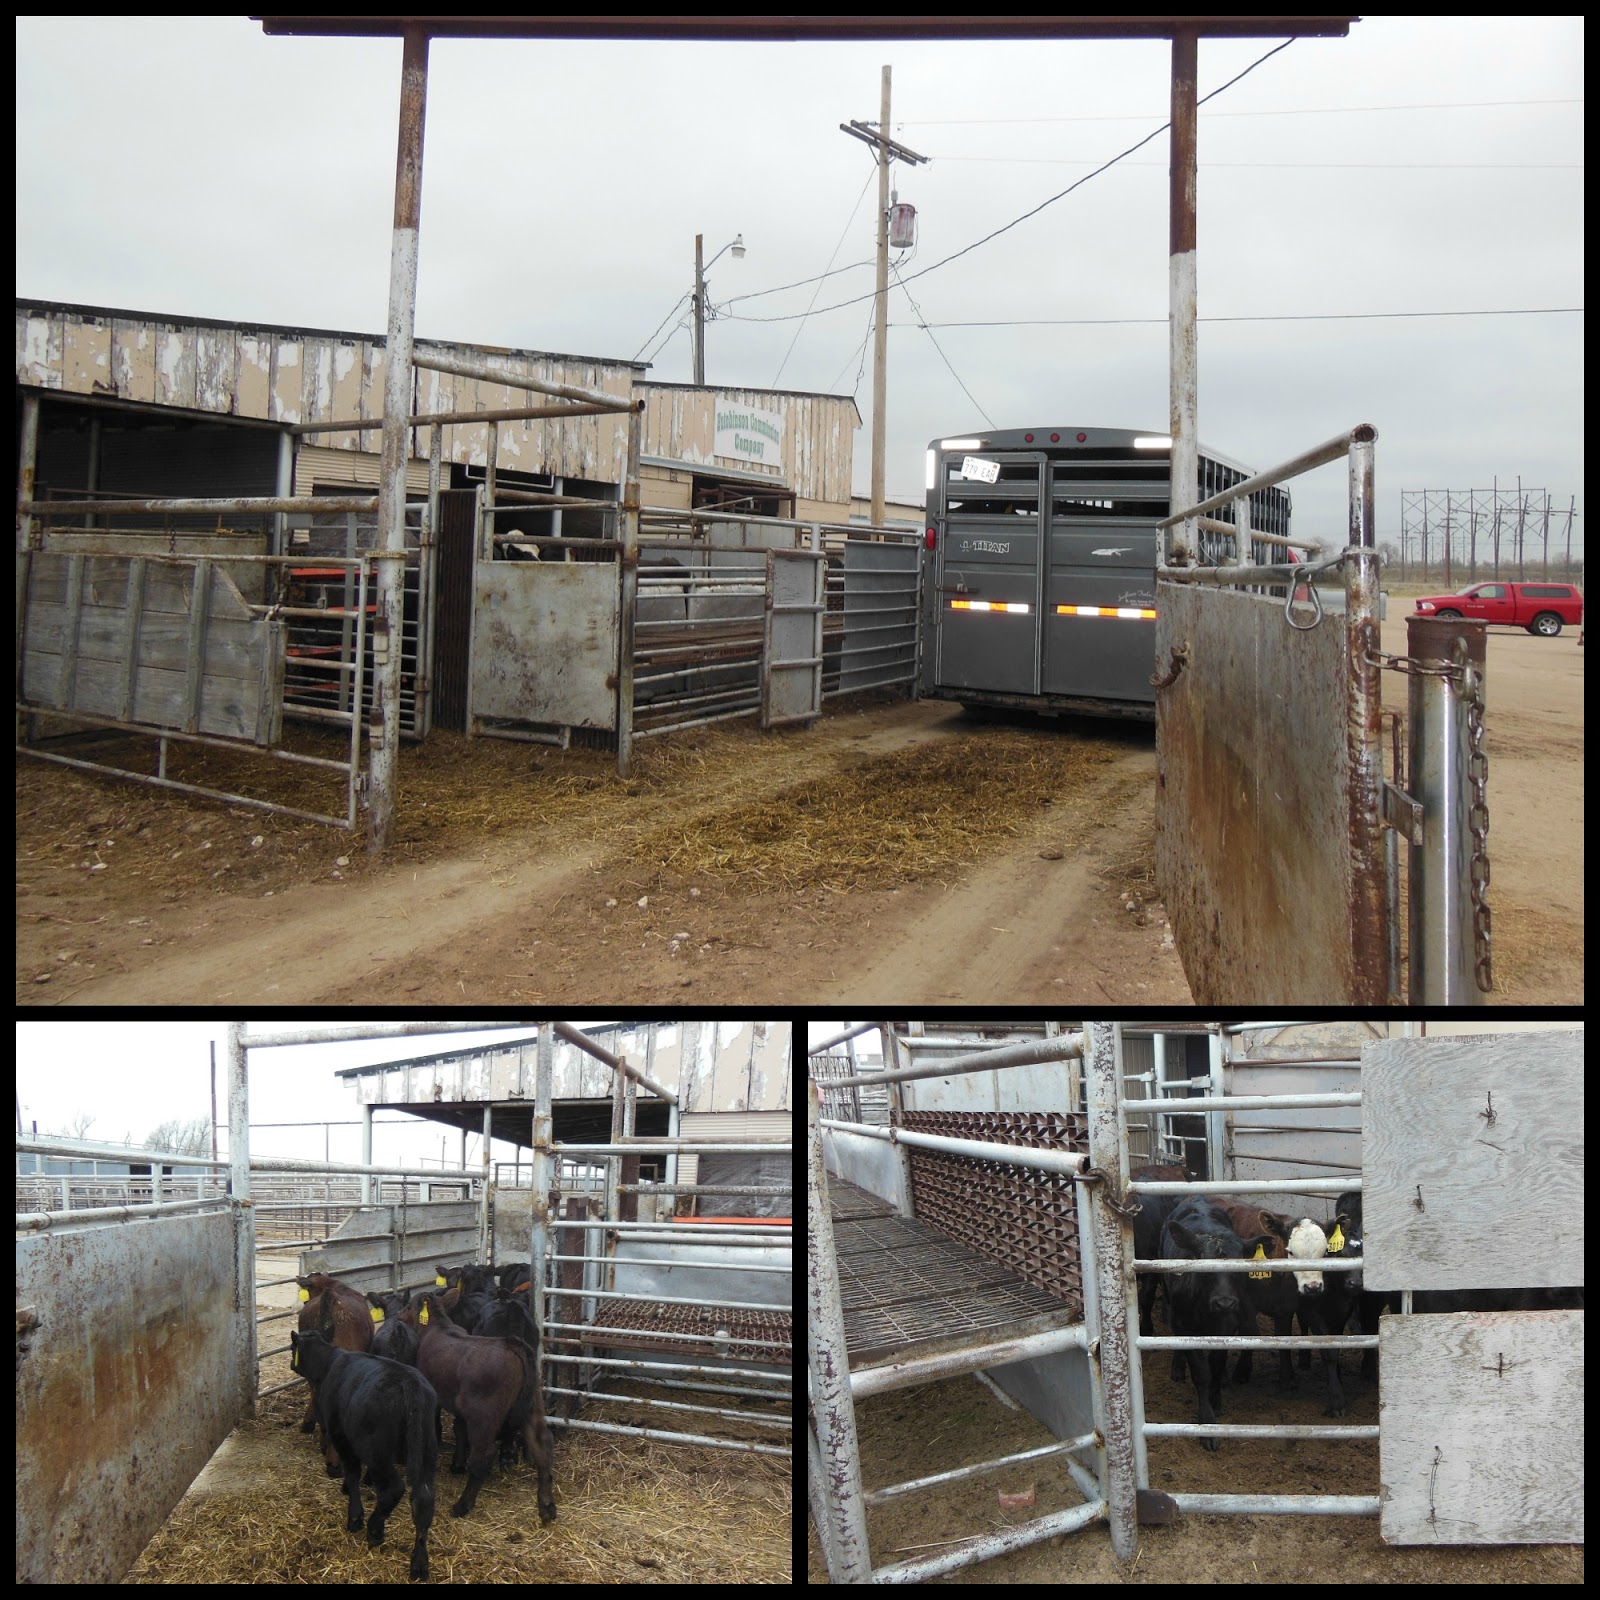 fairview sale barn livestock auction markets